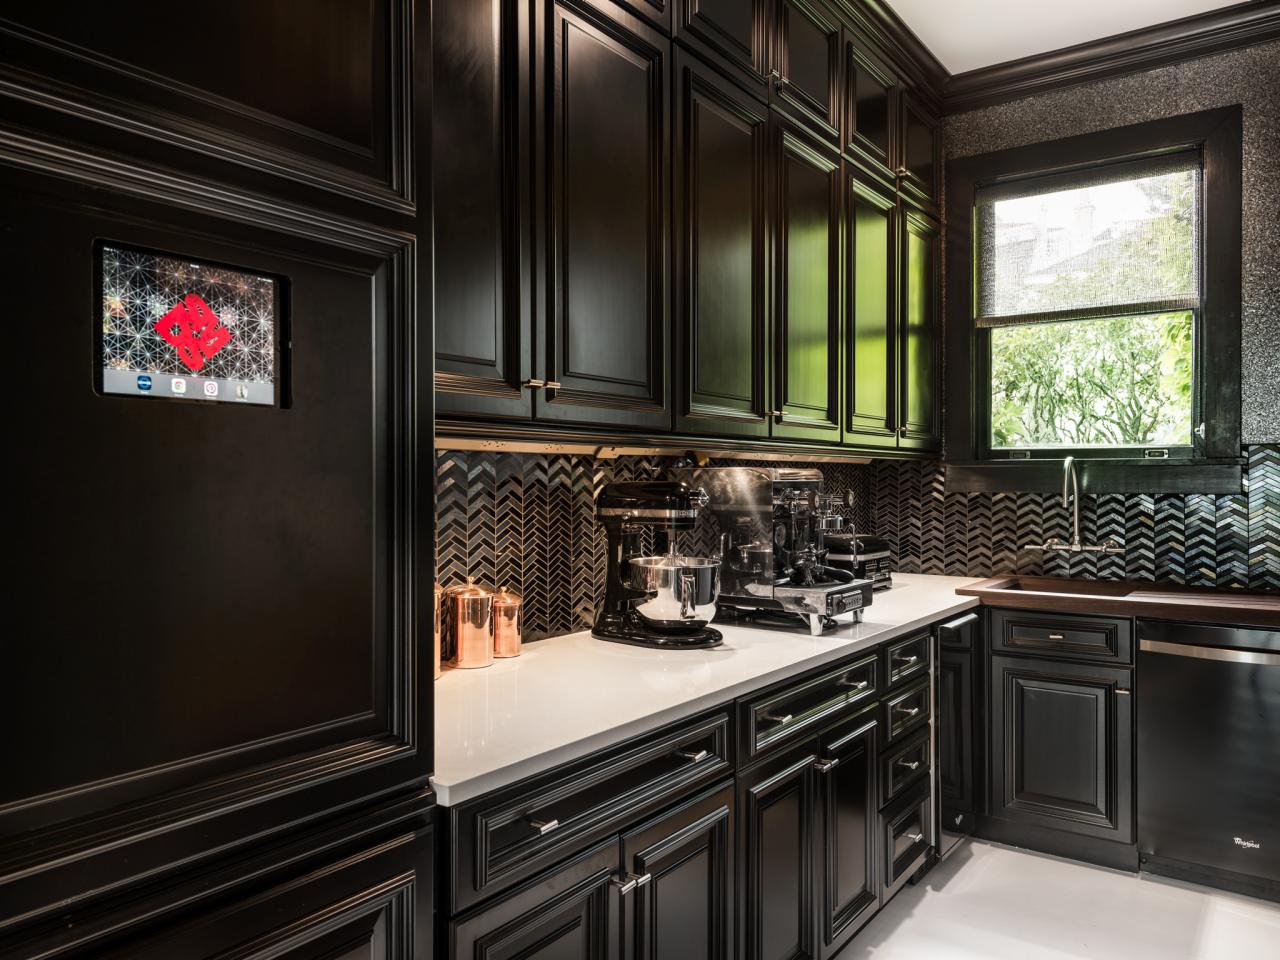 Deluxe black kitchen cabinet